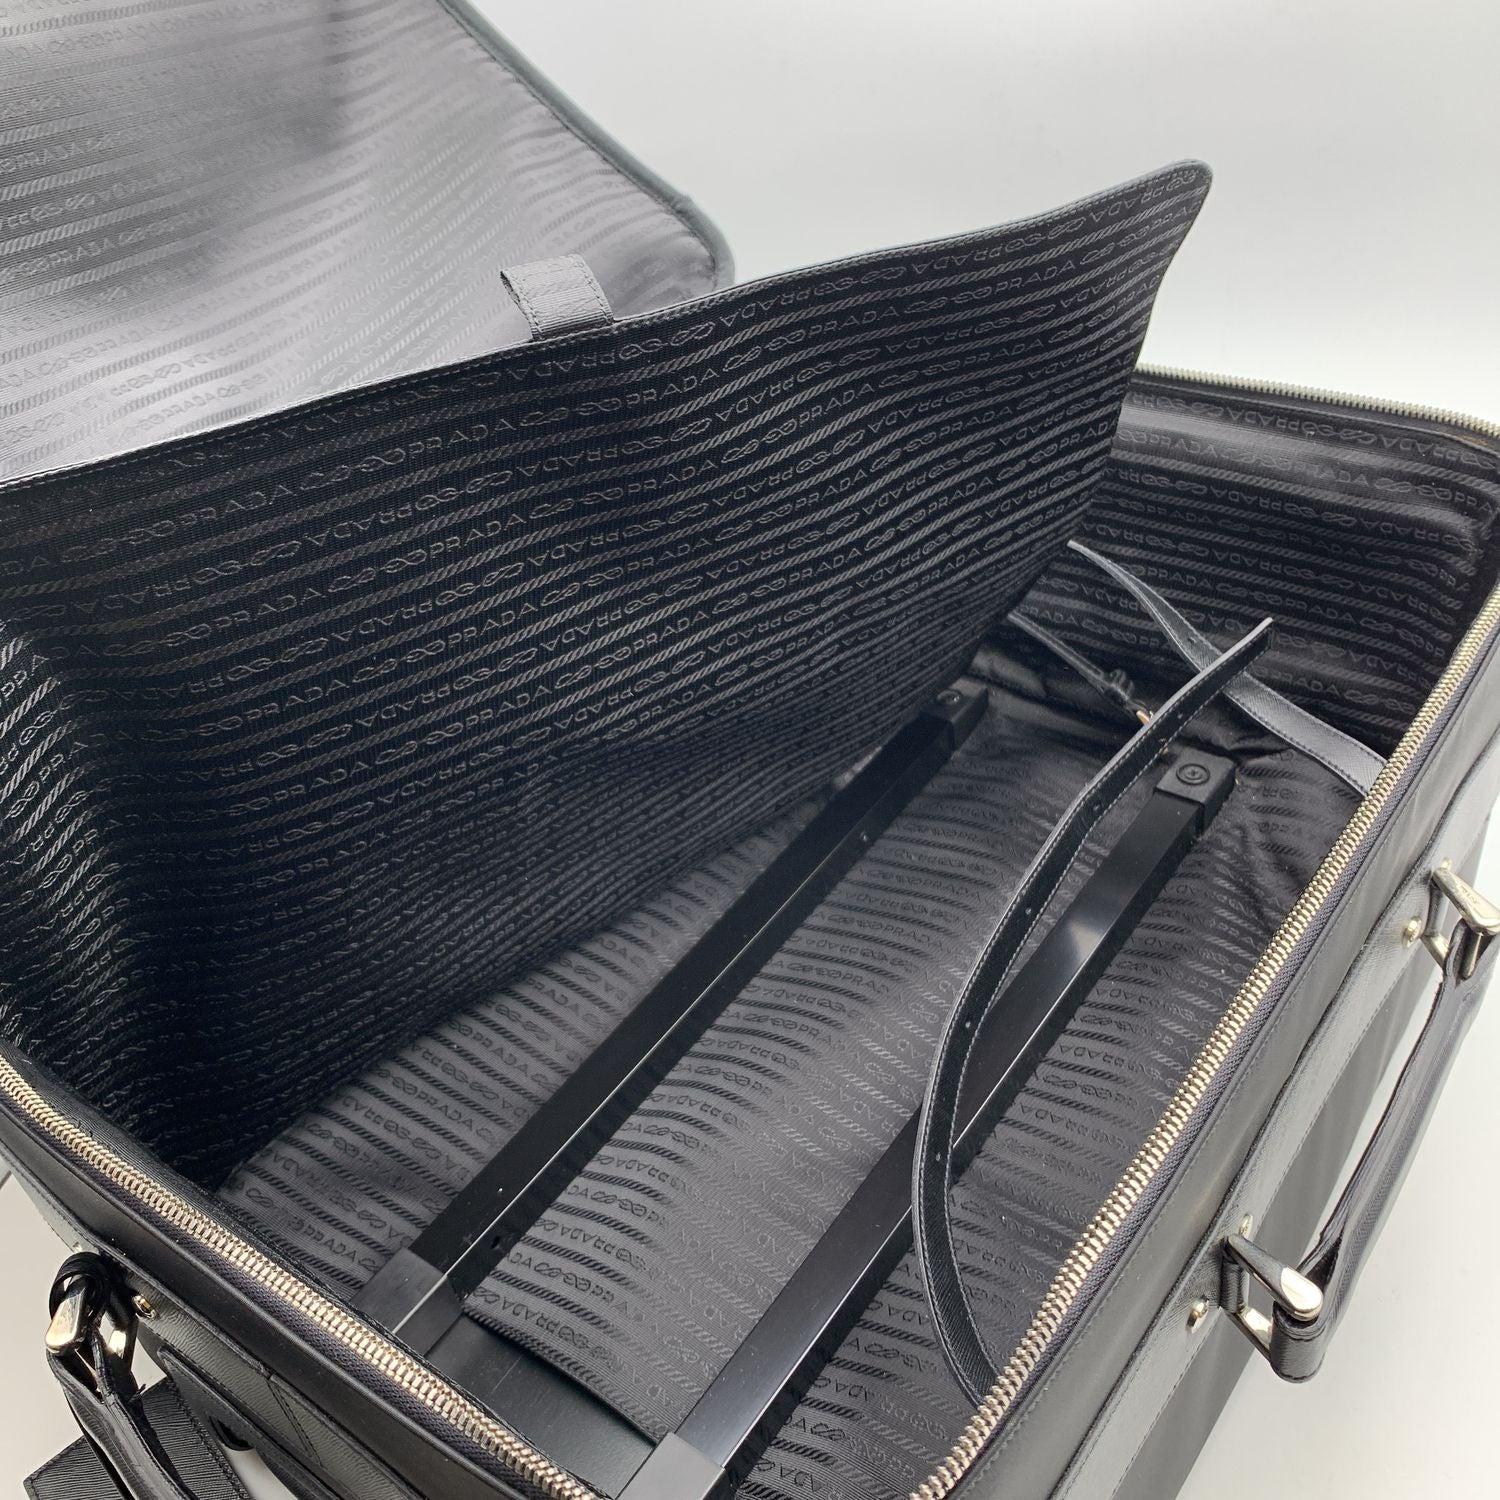 Prada Black Nylon Rolling Suitcase Trolley Luggage Travel Bag 2